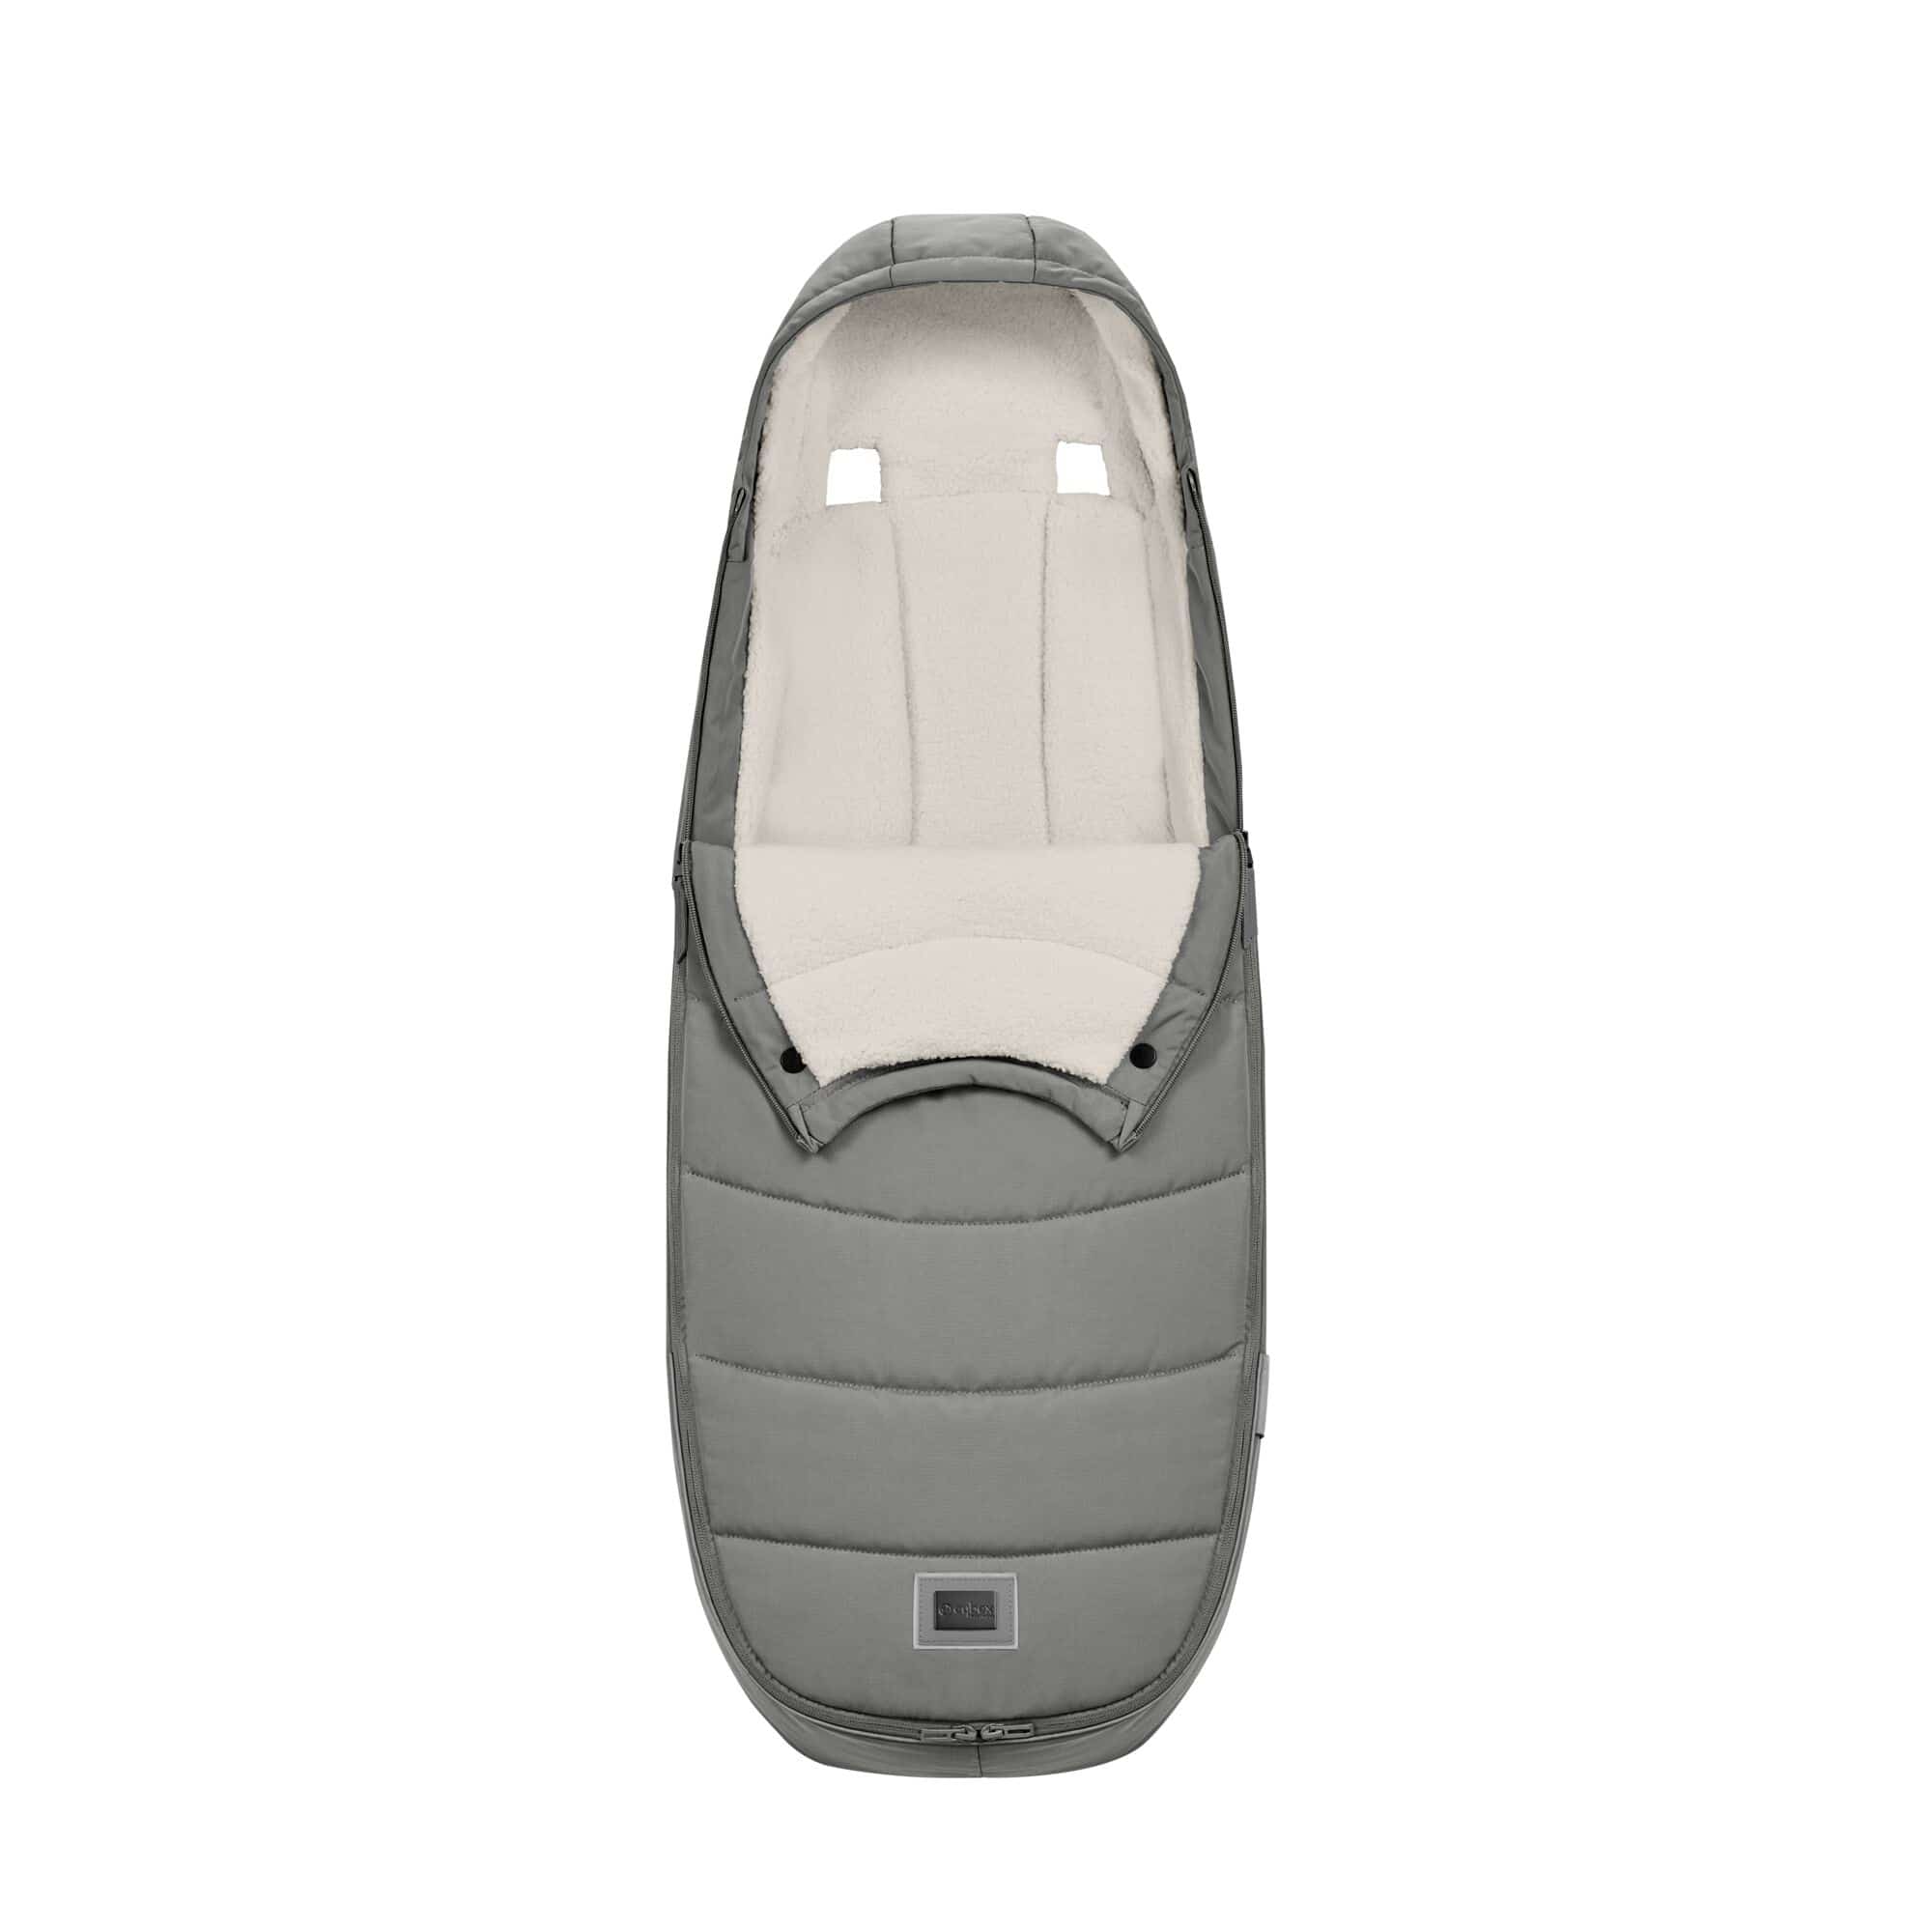 Platinum Fußsack Mirage Grey cybex PLATINUM Grau 2000585059514 2